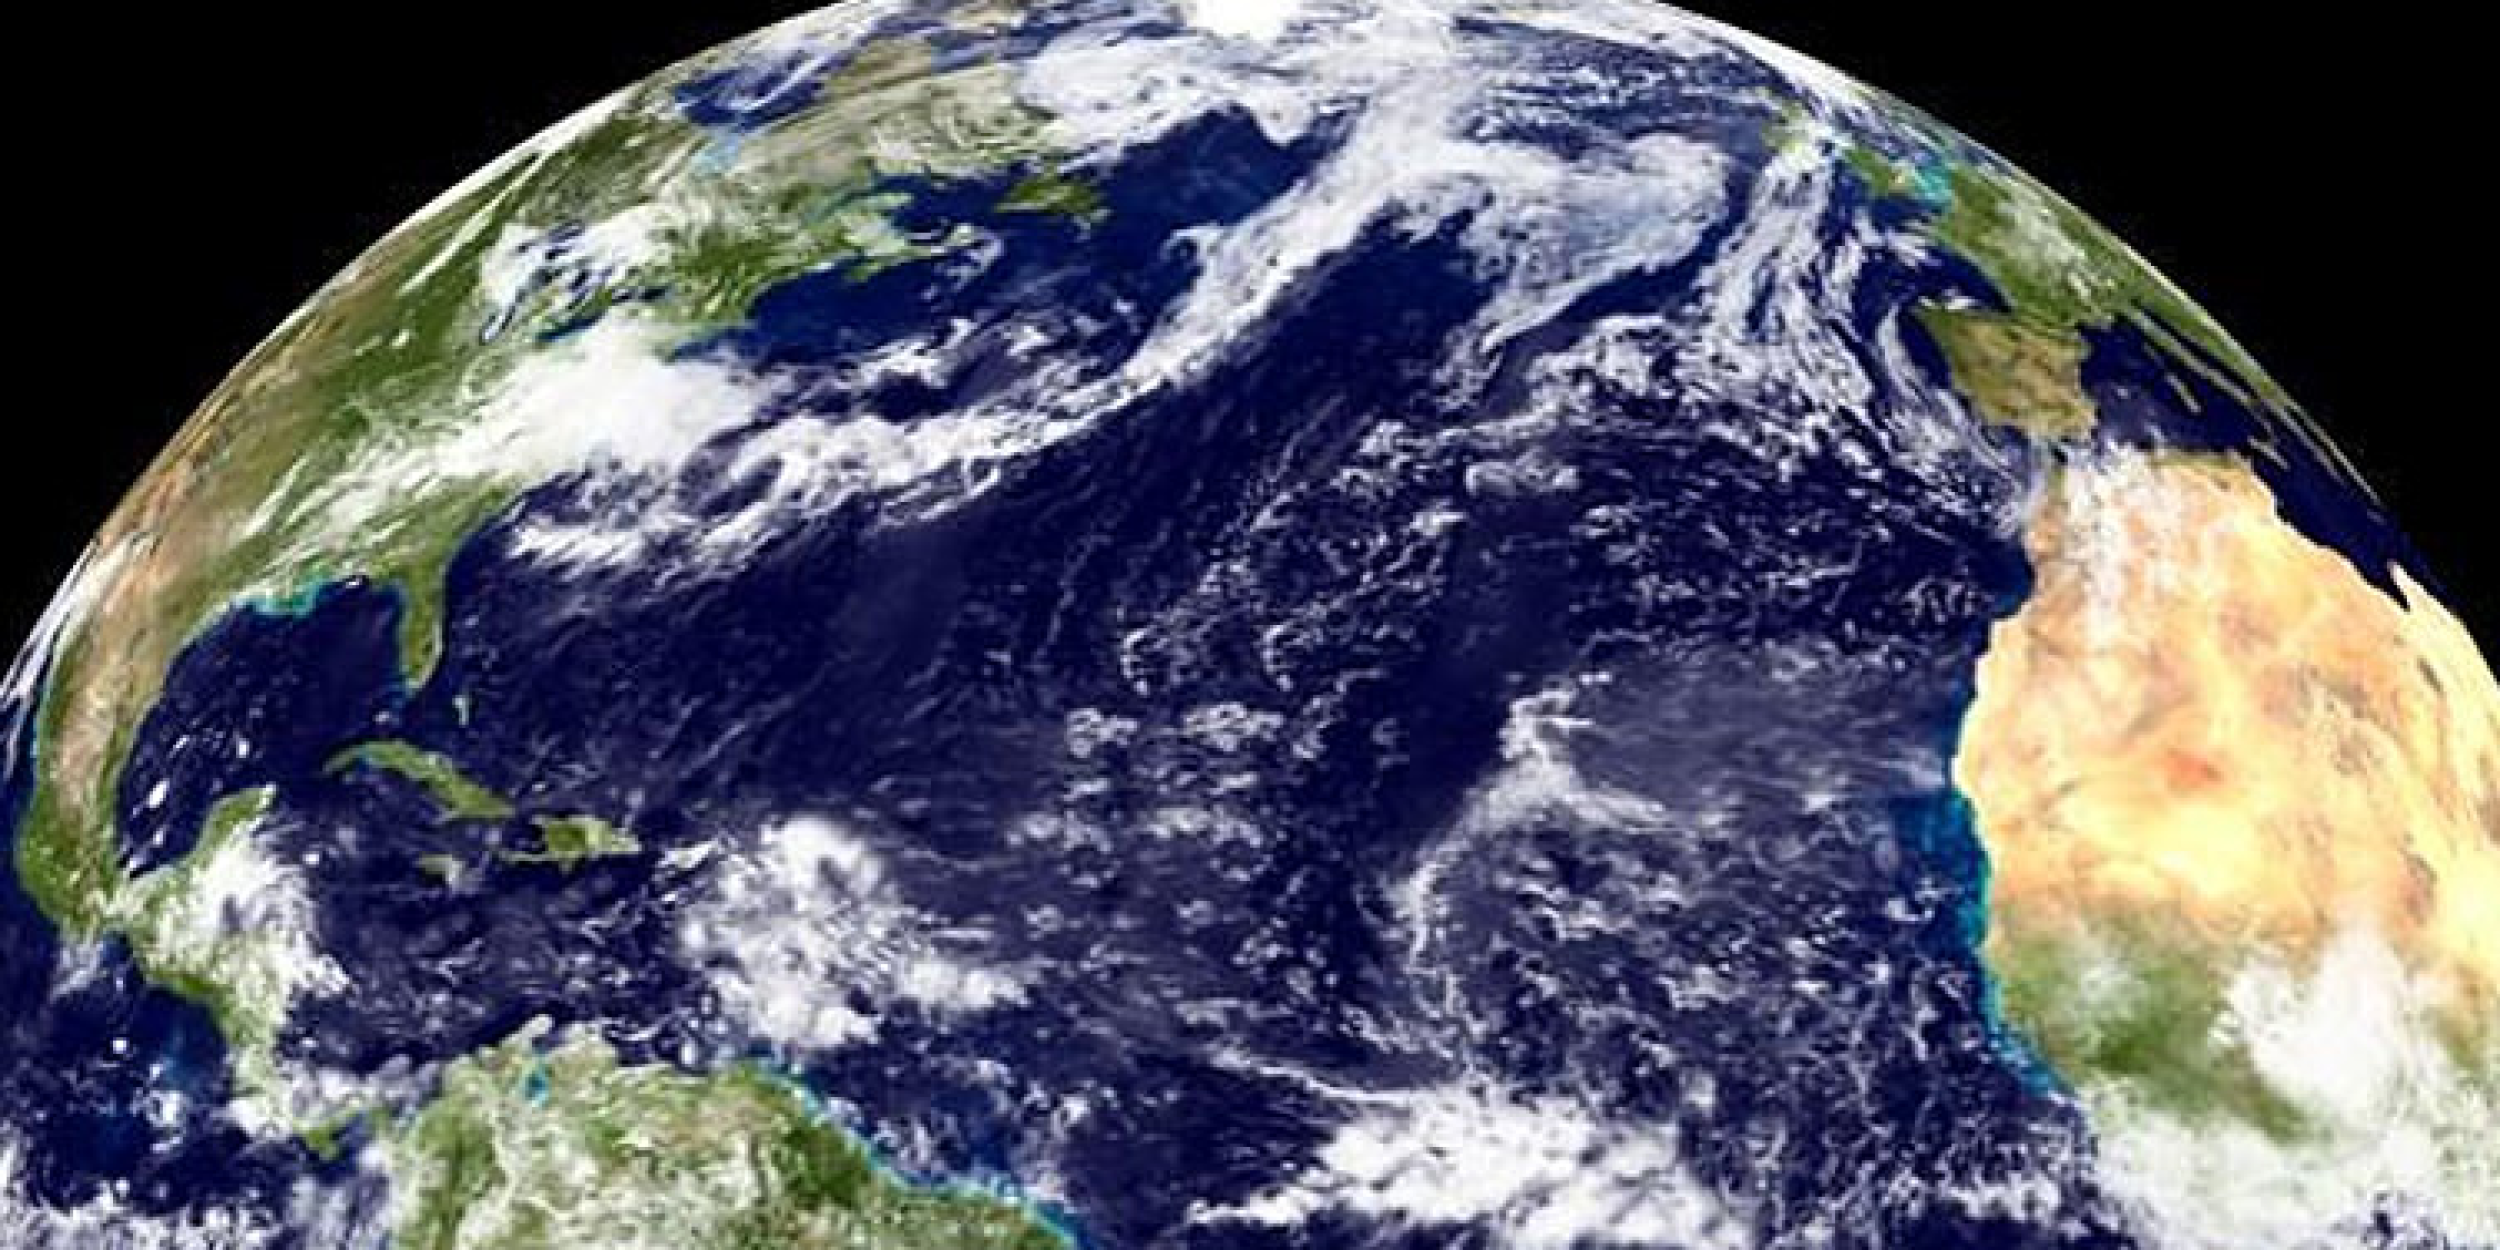 The Atlantic Ocean seen from space Image credit: NOAA/NOS